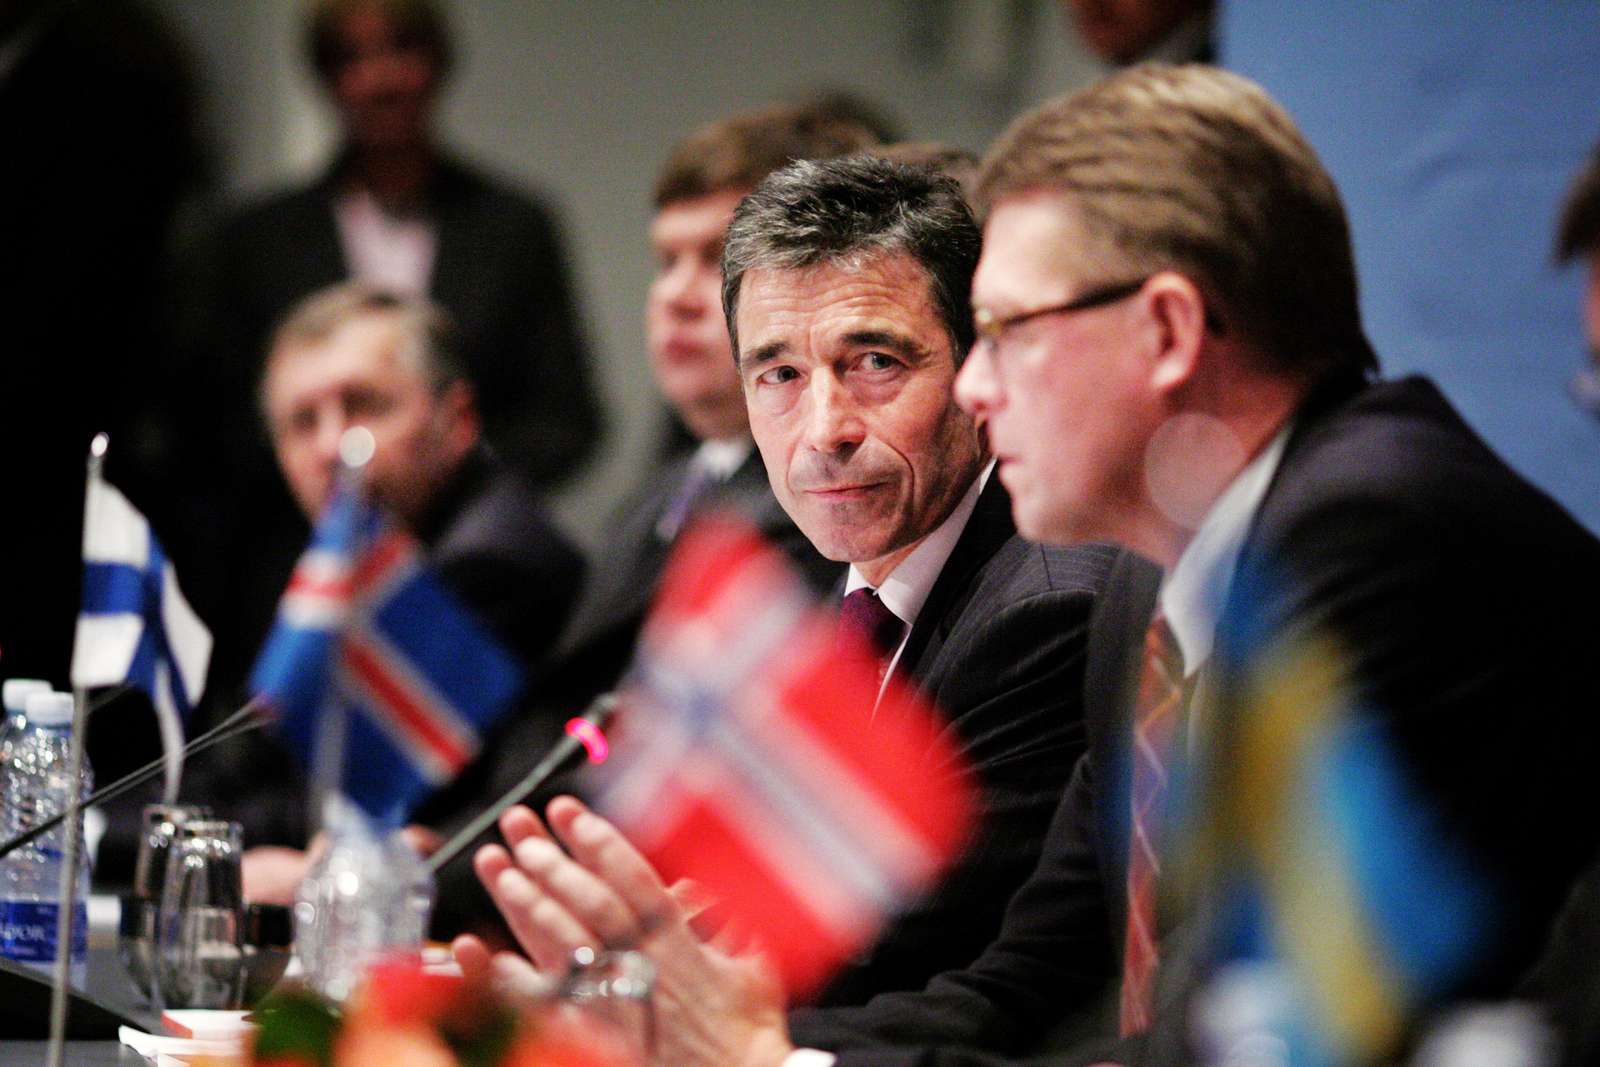 2006 - Nordic Council Session